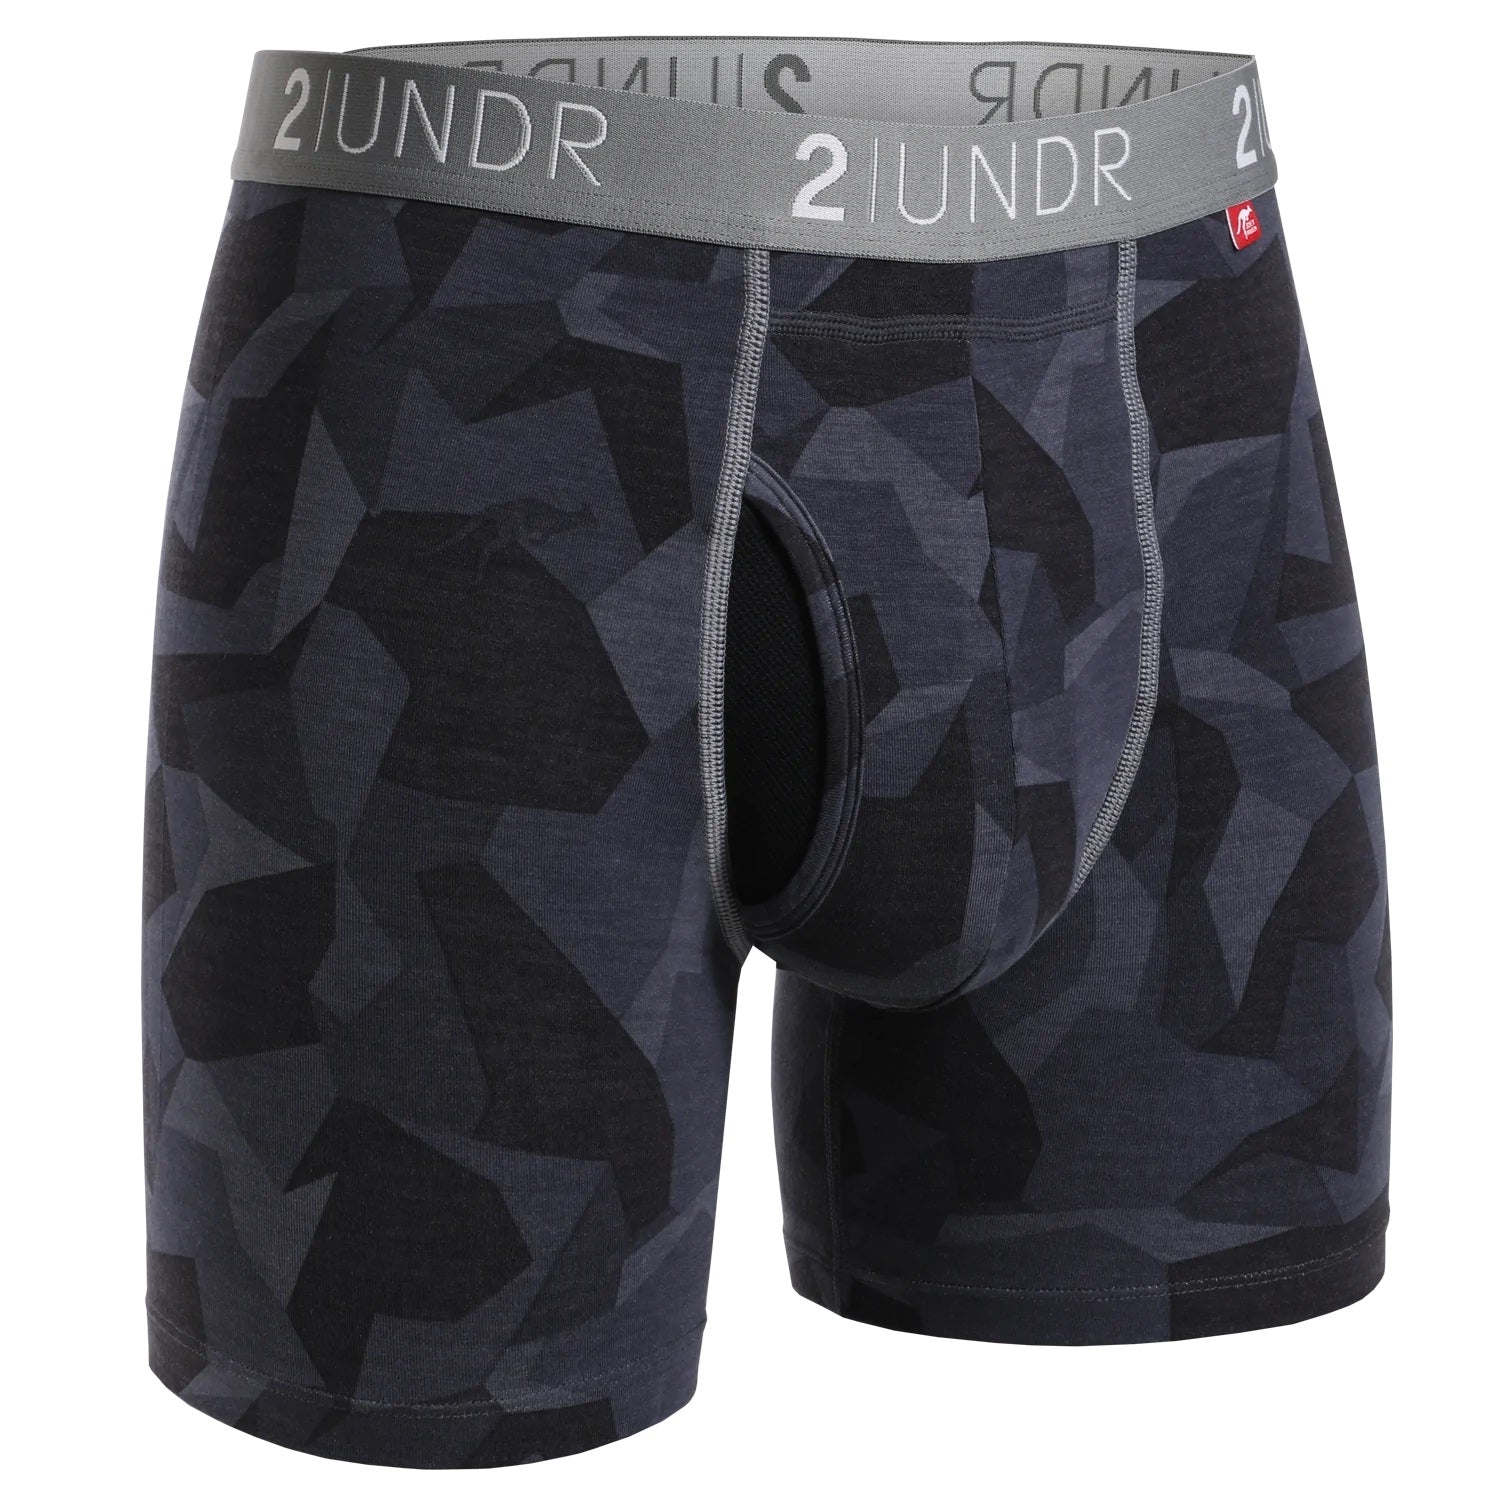 2UNDR Swing Shift - 6 Boxer Brief 2-Pack - Grey/Black